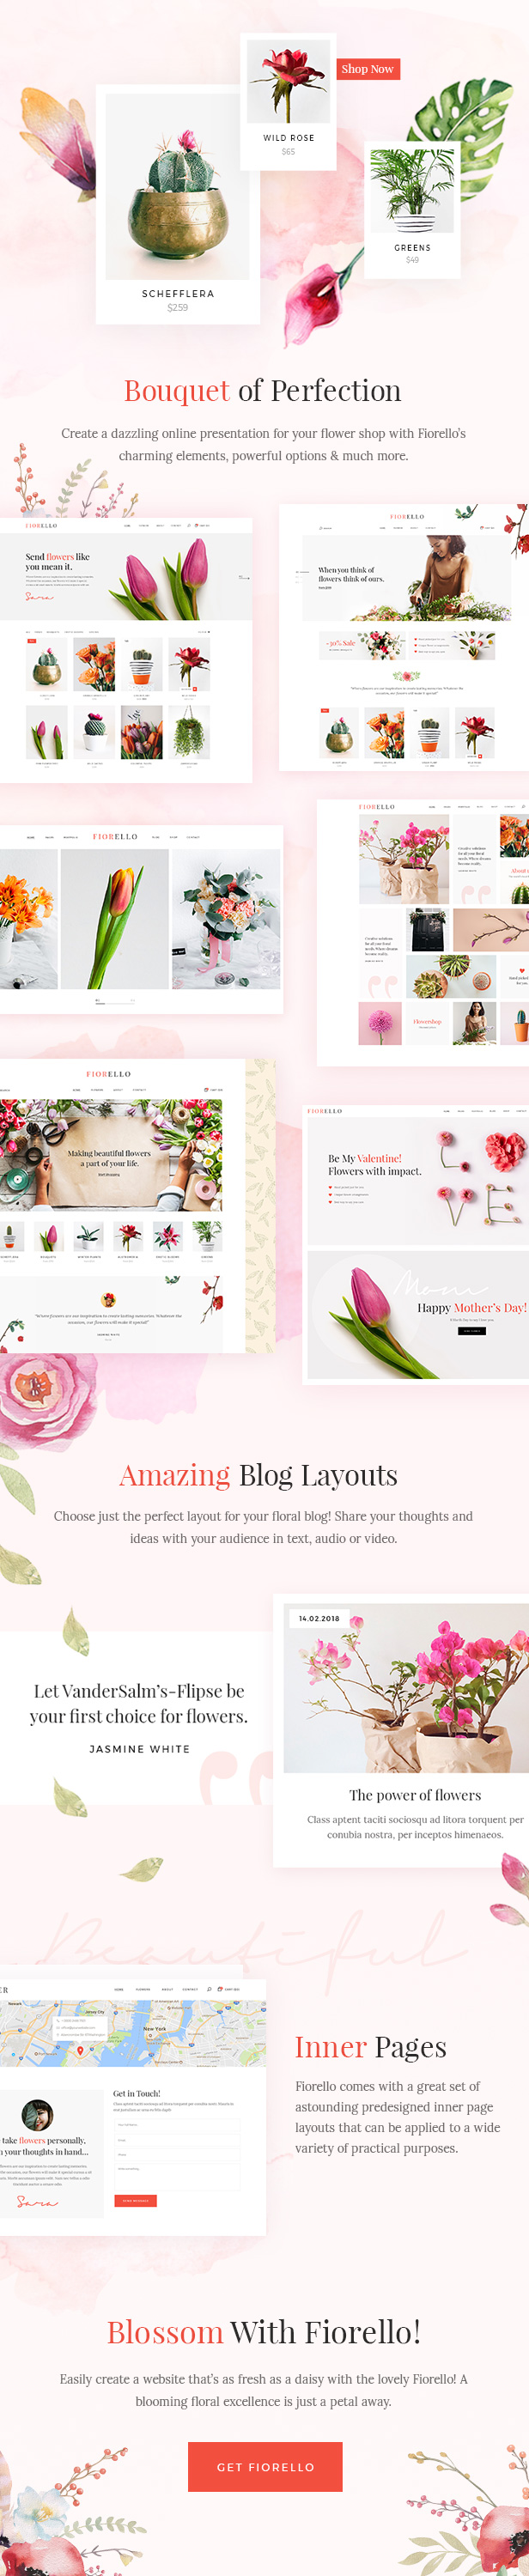 WordPress theme Fiorello - A Flower Shop and Florist WooCommerce Theme (WooCommerce)